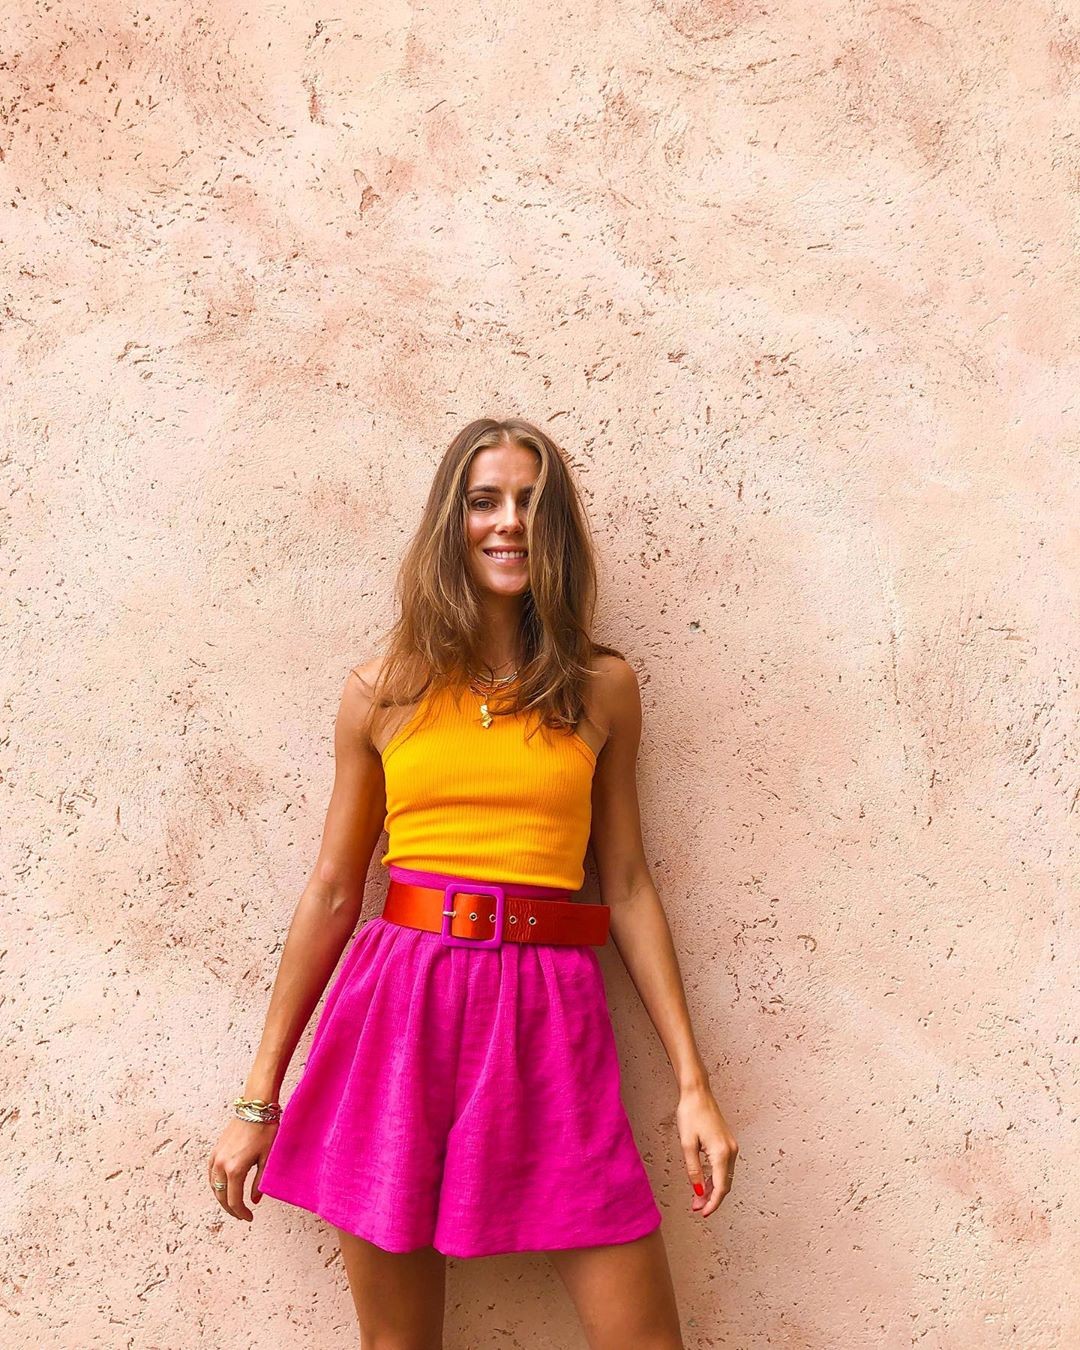 Nina Sandbech usa look colorido. (Foto: Instagram)